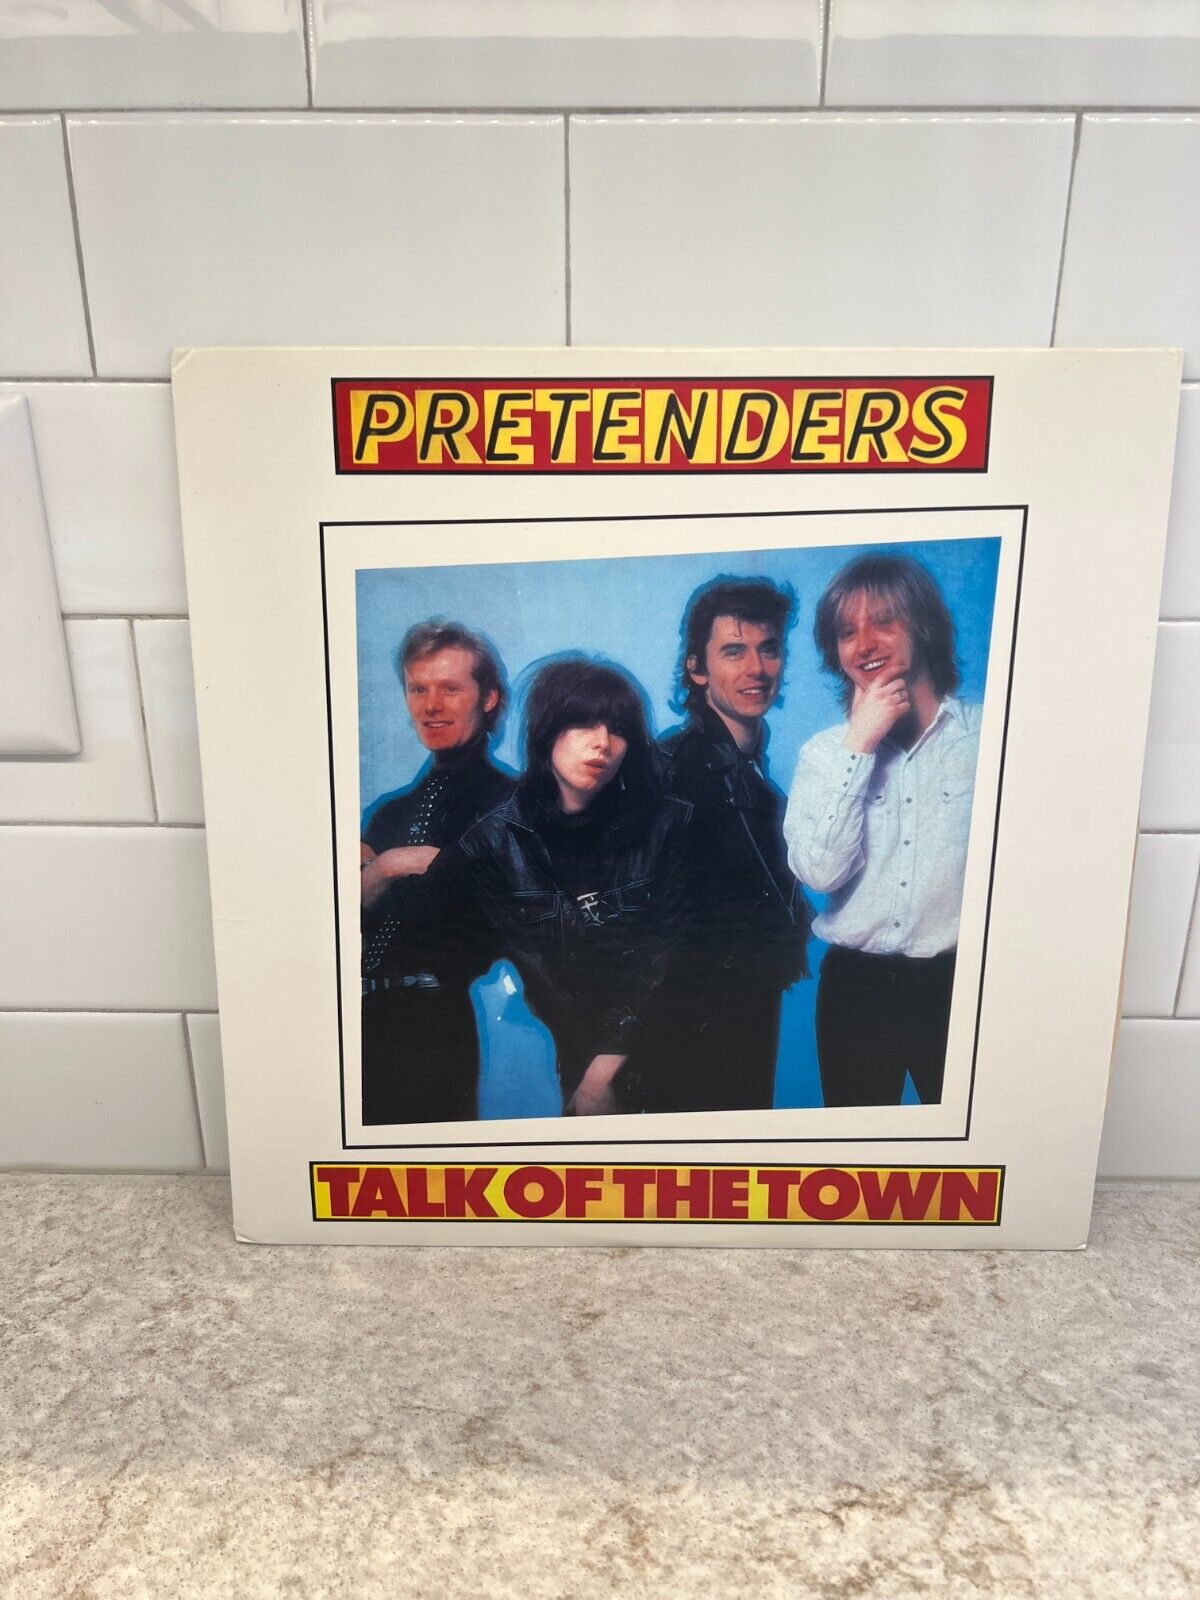 THE PRETENDERS - Talk Of The Town - Vinyl LP Record Album import